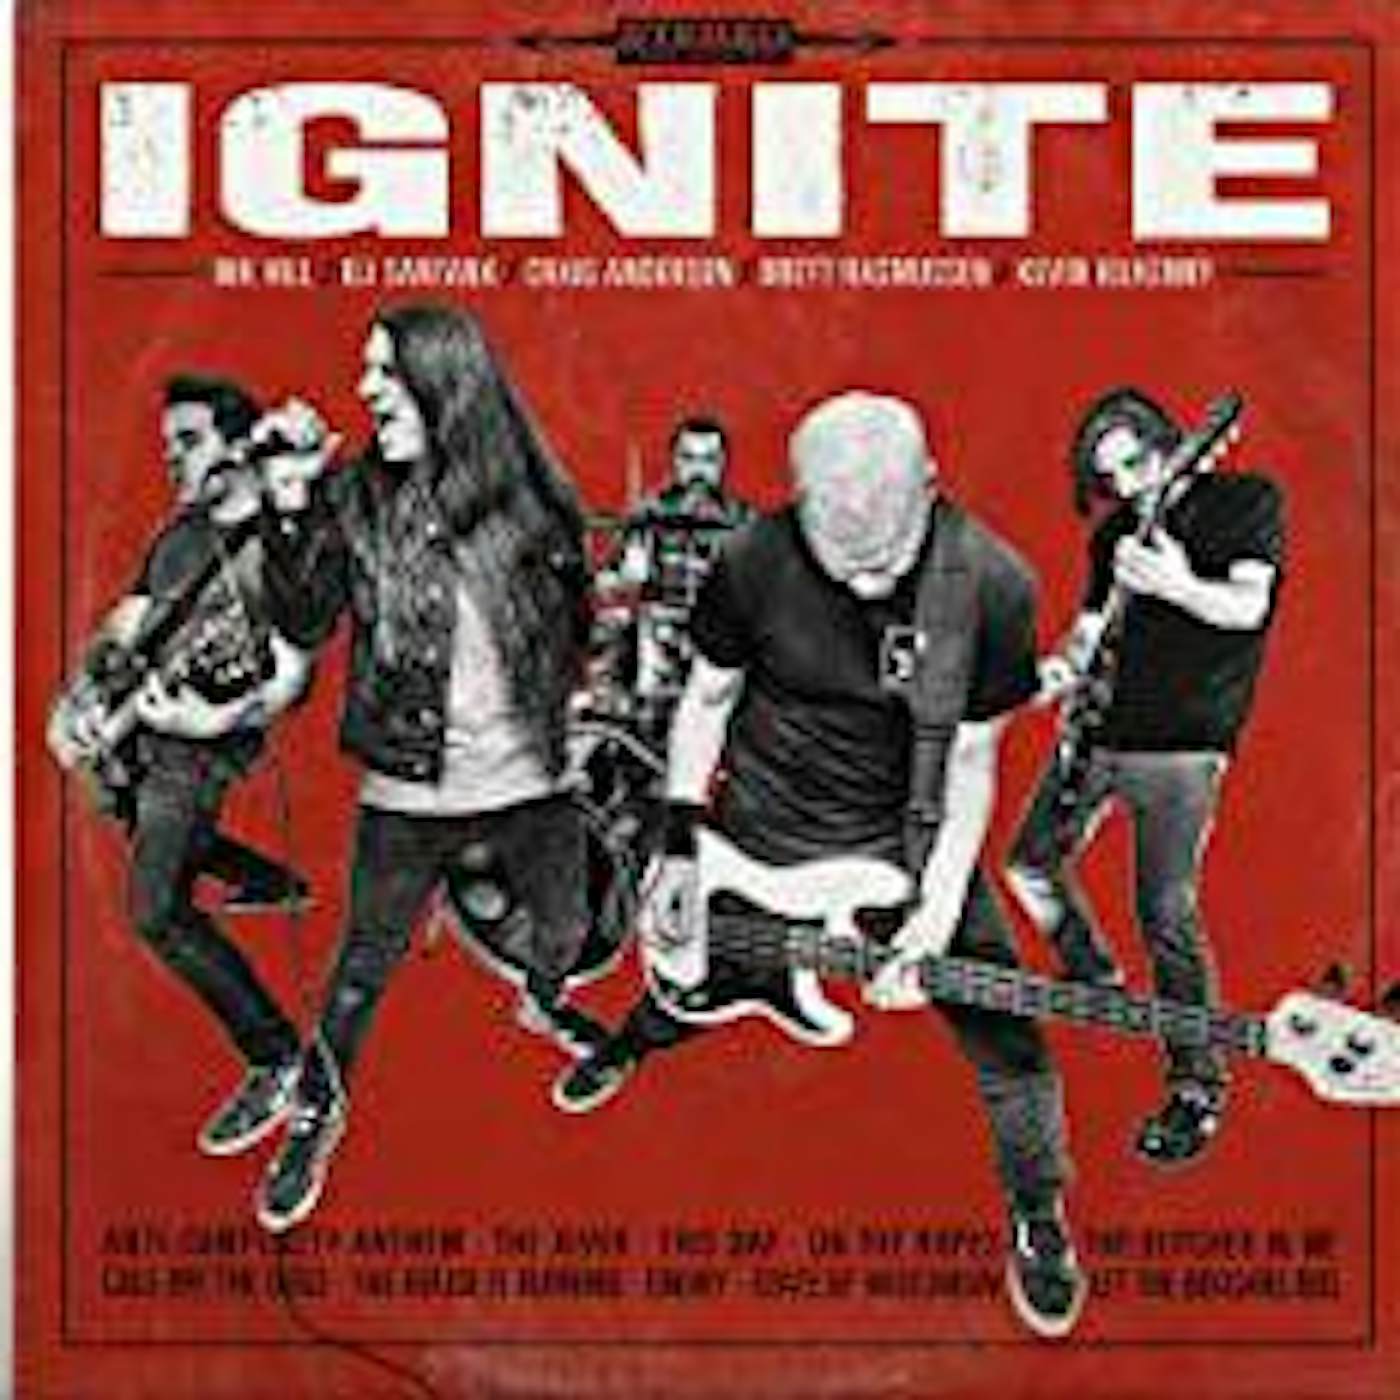 Ignite Vinyl Record